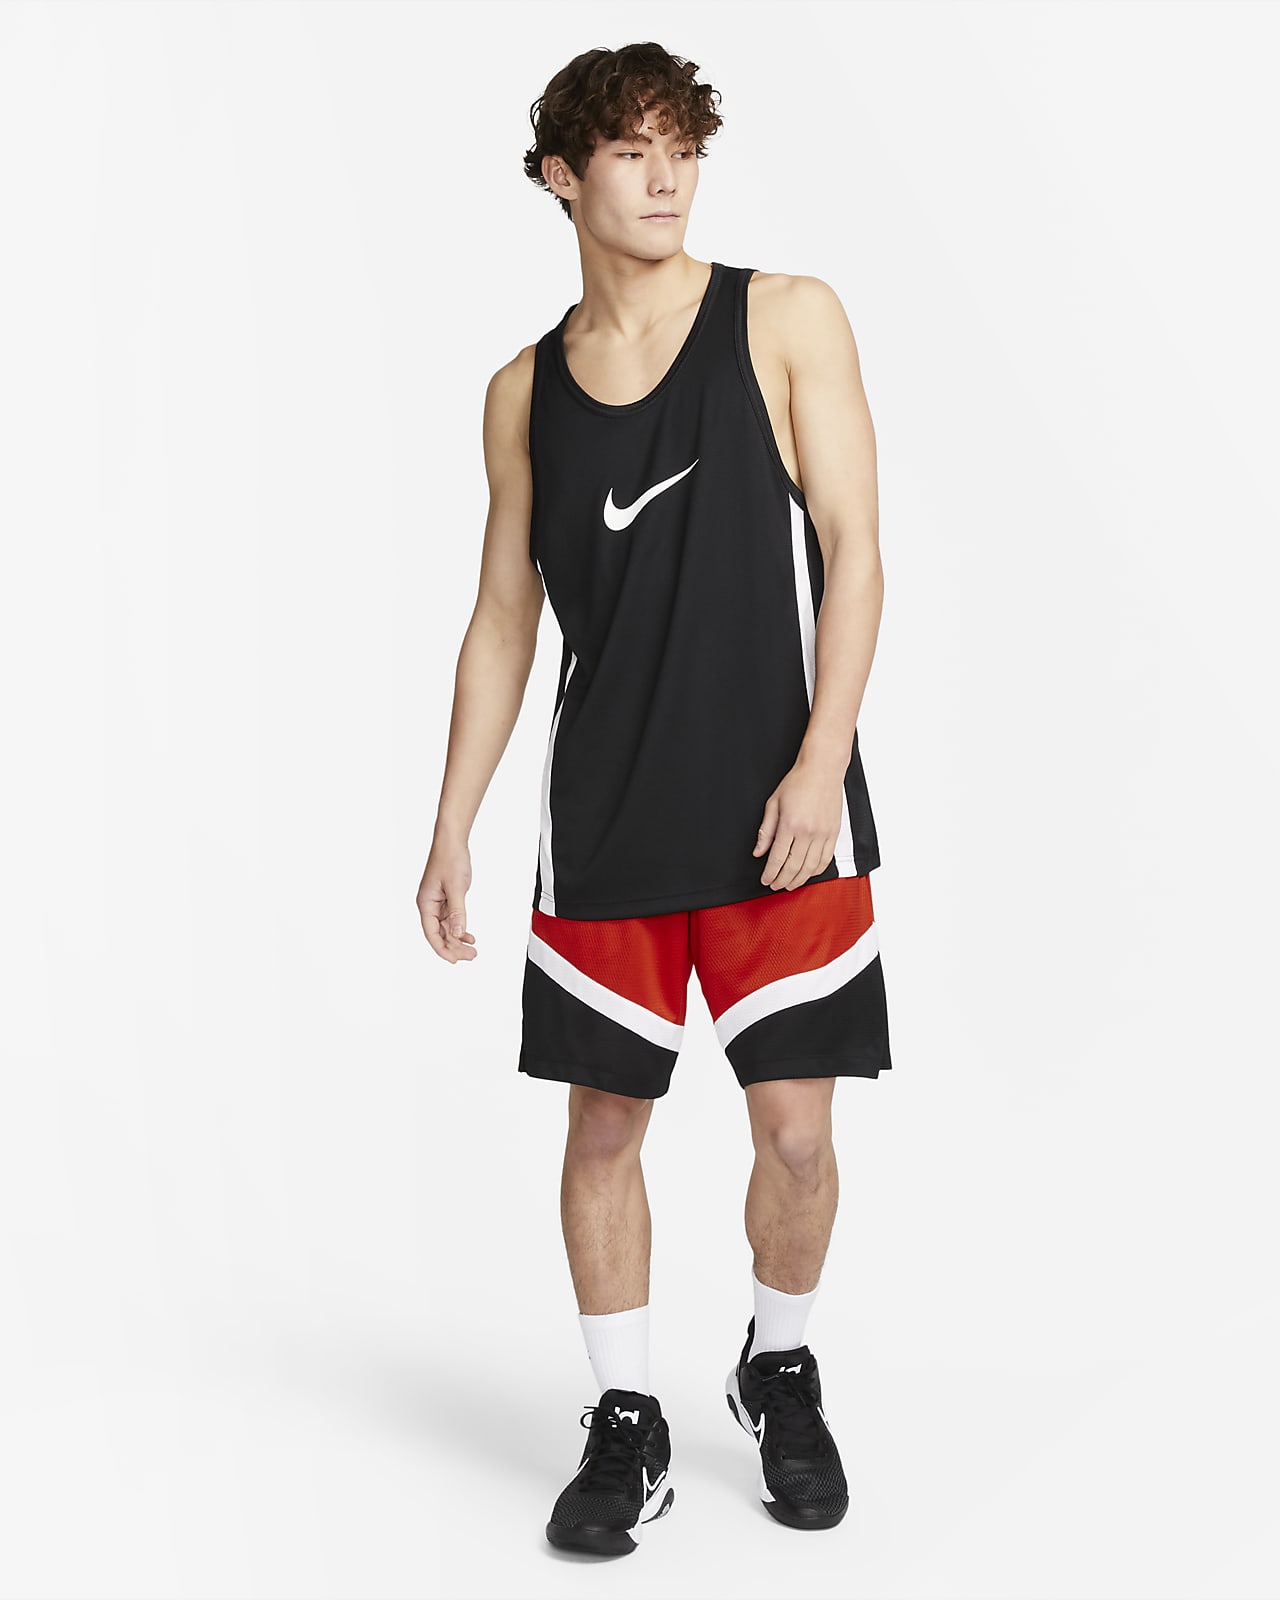 Pirate Judgment Traffic jam Nike Dri-FIT Icon Men's 28cm (approx.) Basketball Shorts. Nike ID